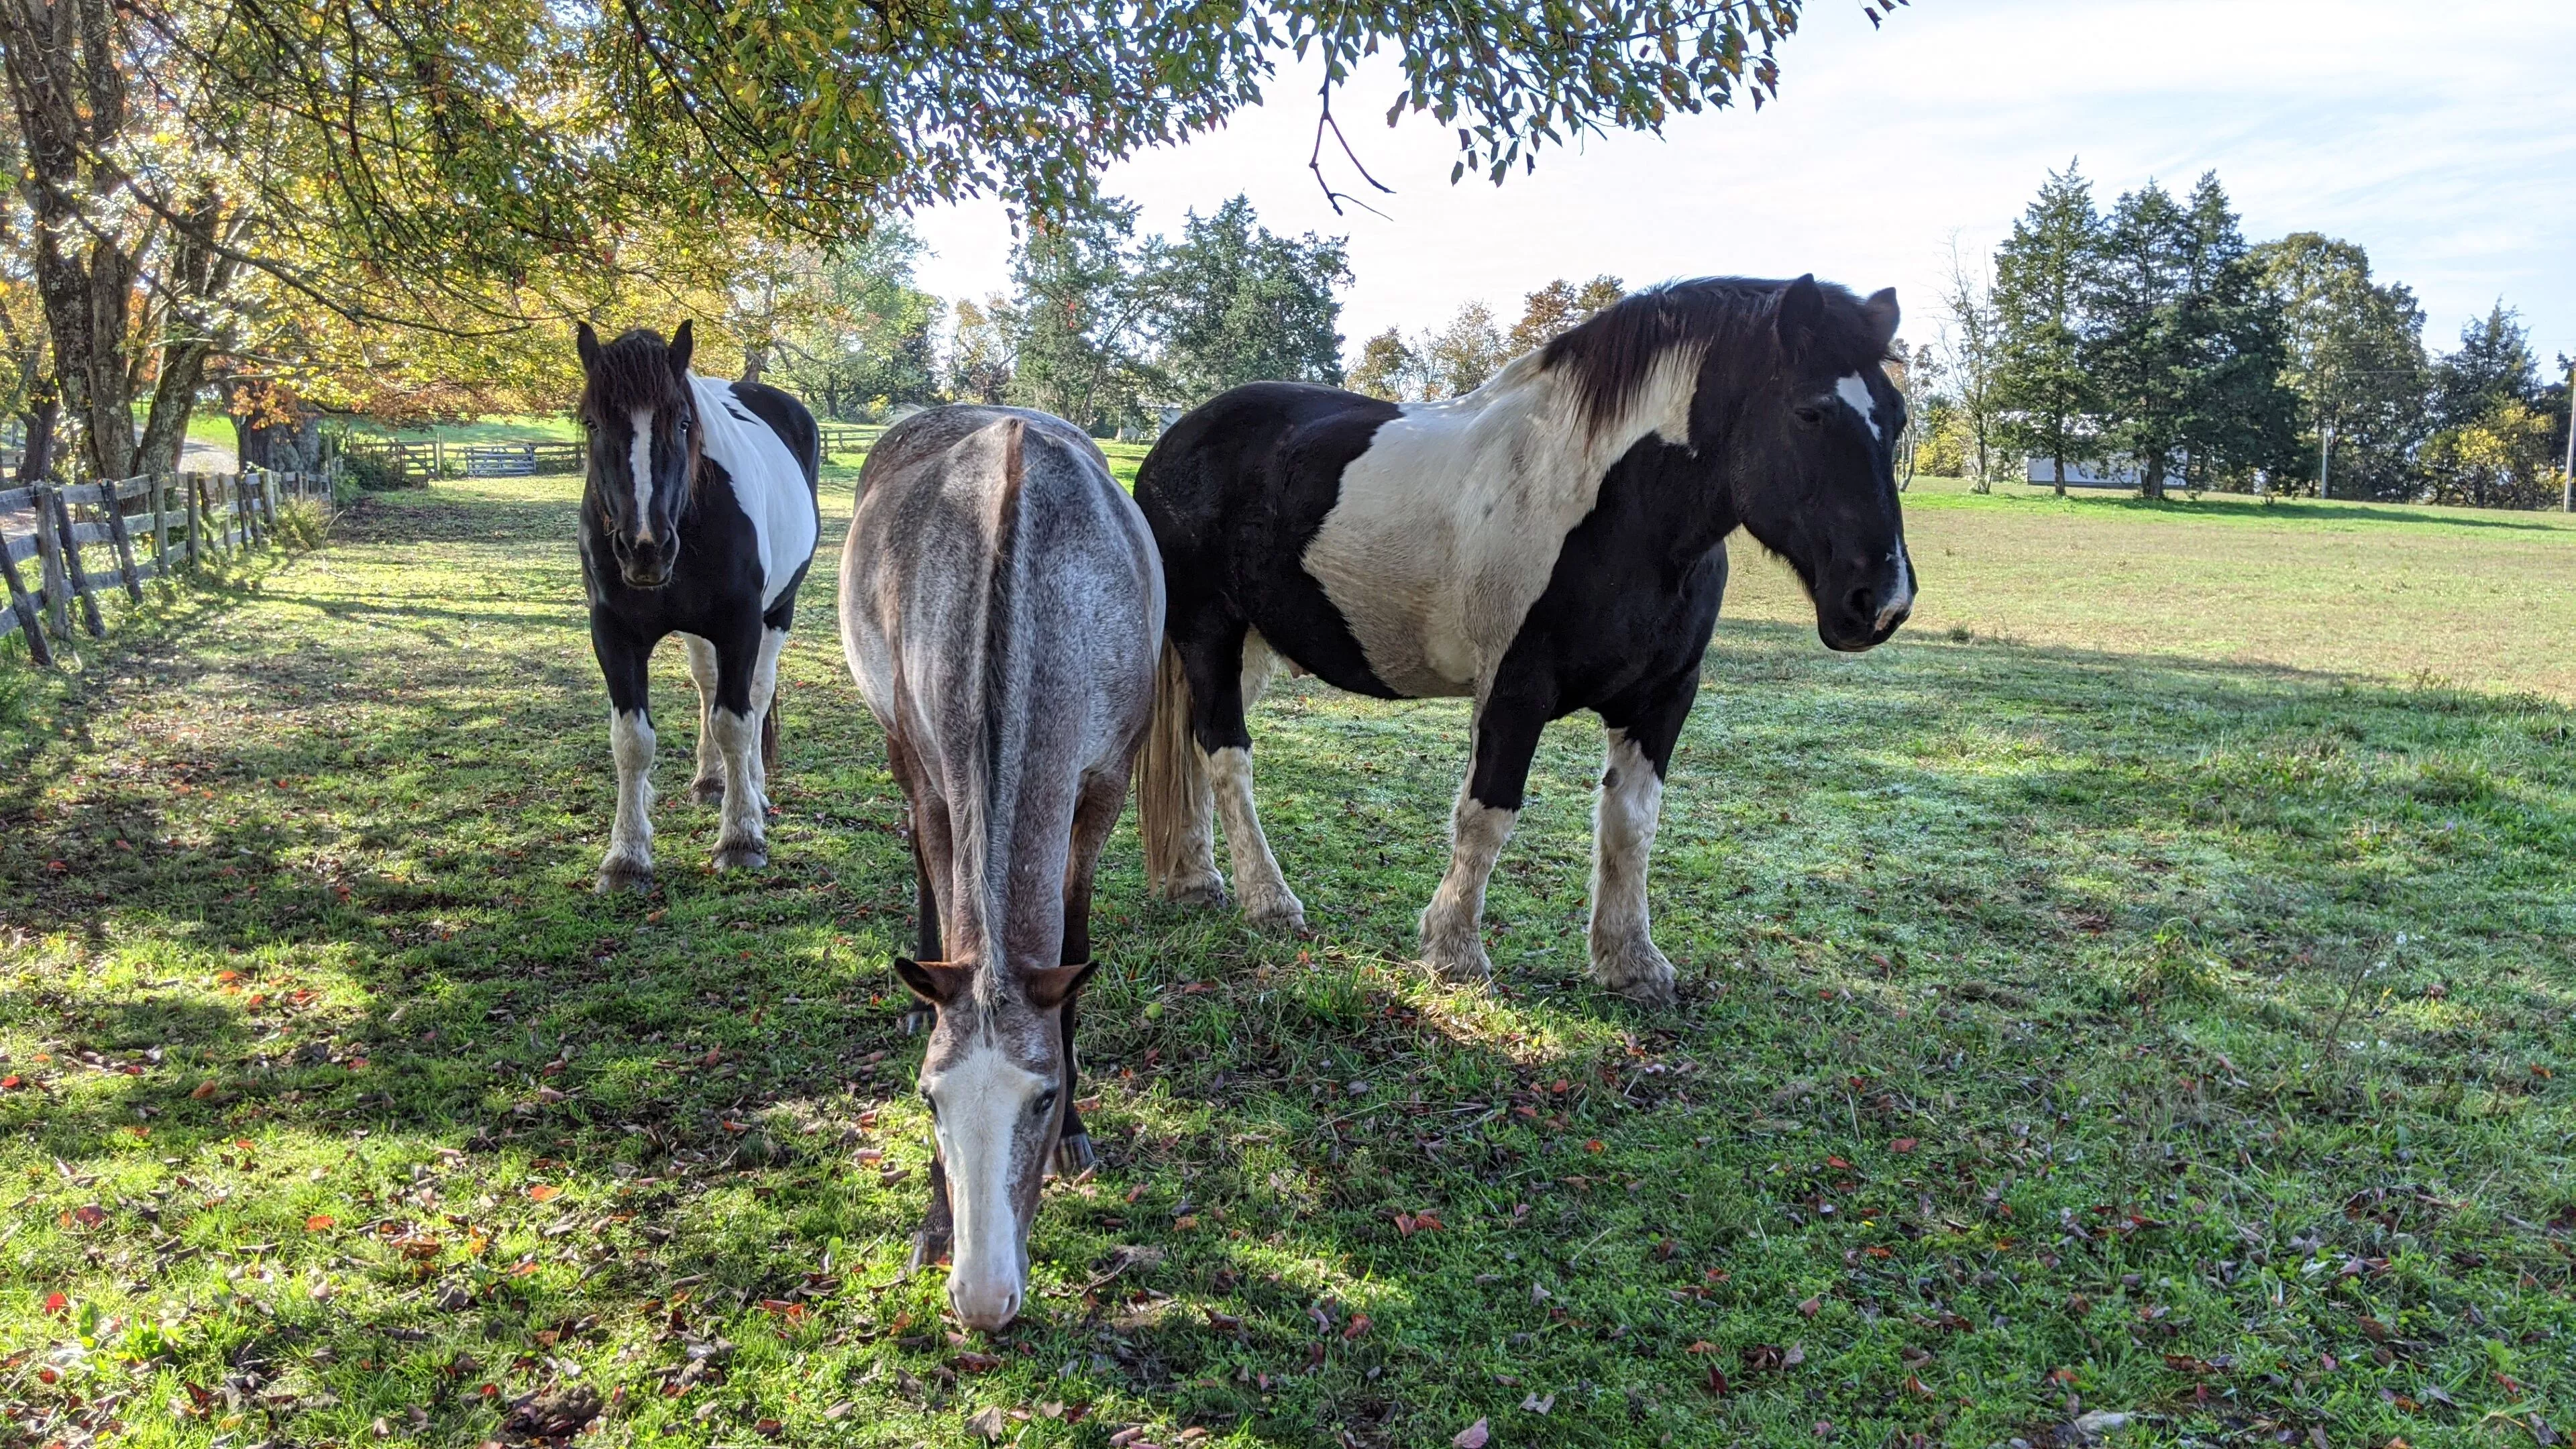 An image of three horses named Jack, Oreo and Coco